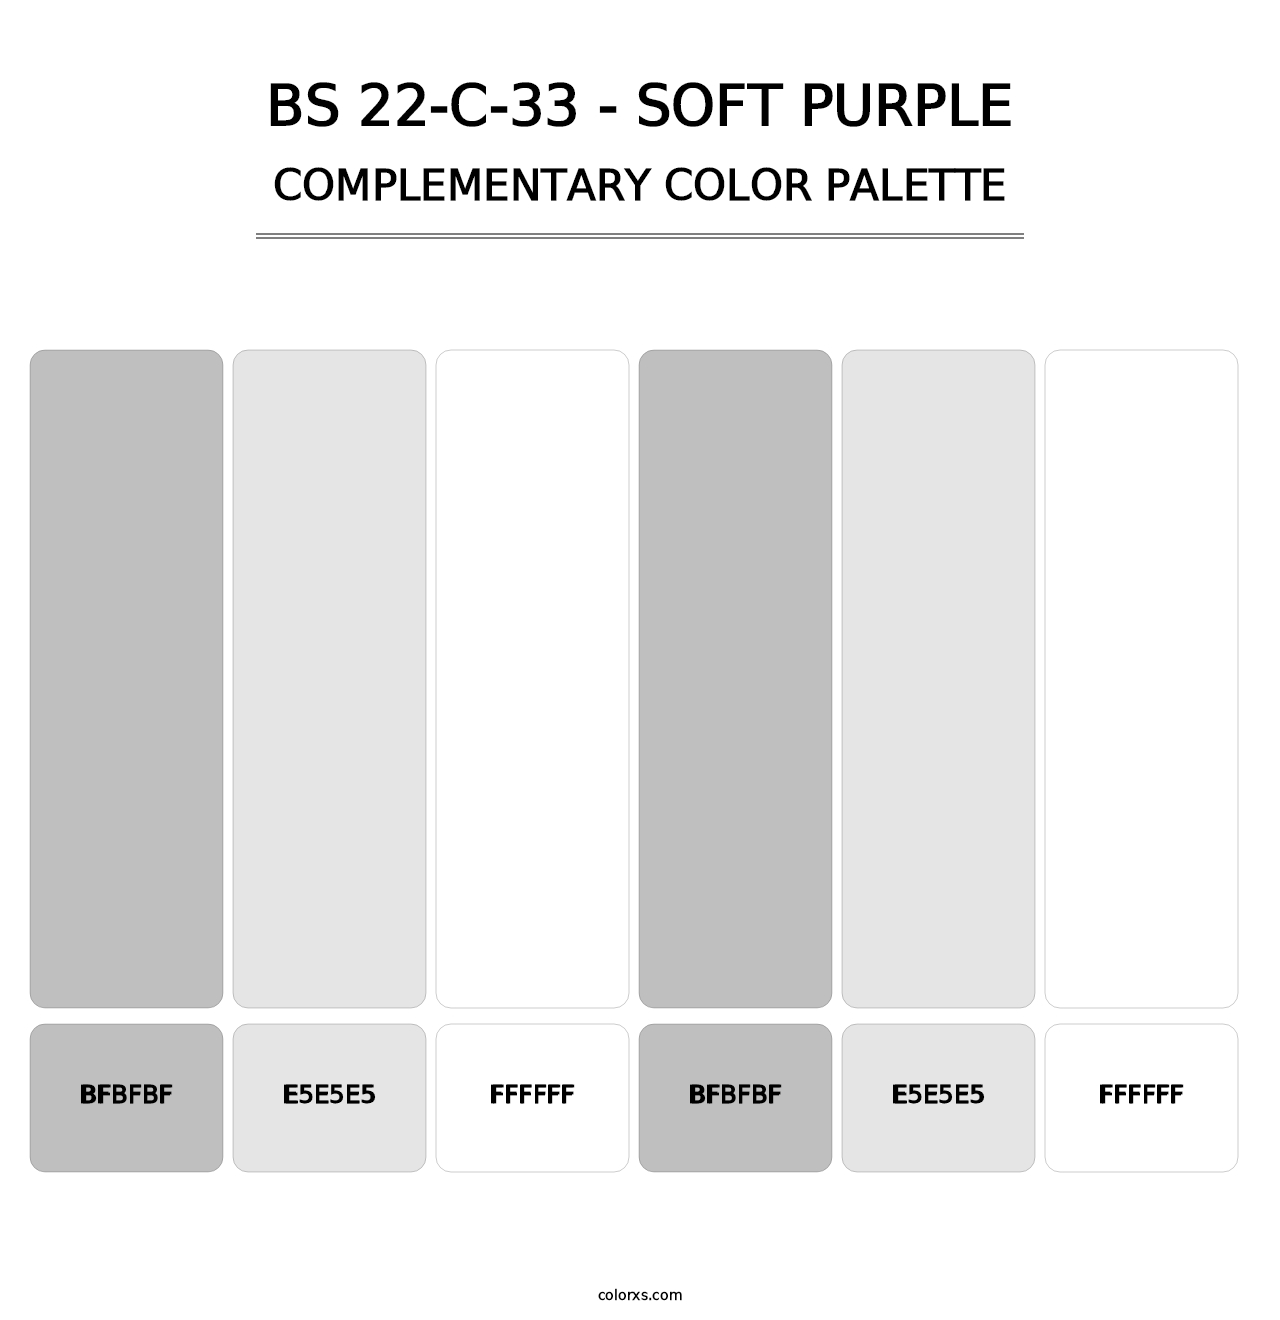 BS 22-C-33 - Soft Purple - Complementary Color Palette